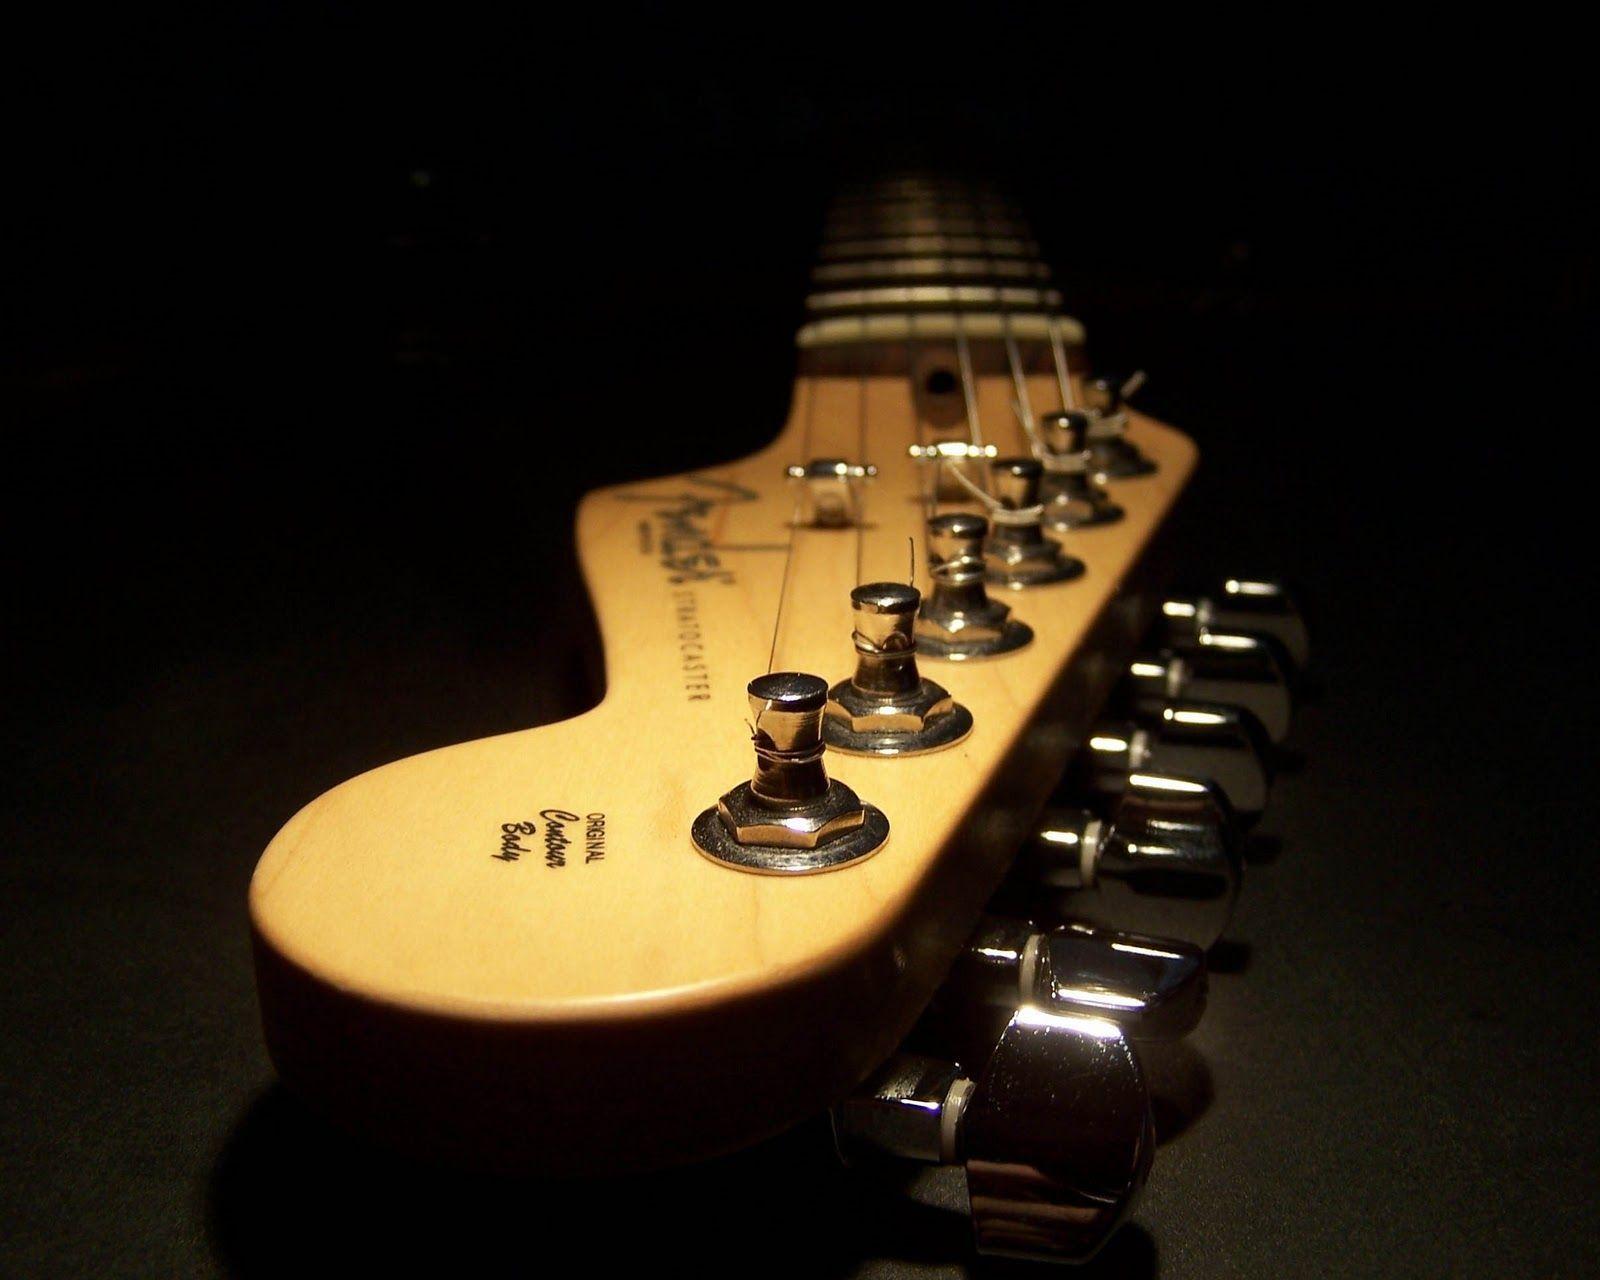 Fender Stratocaster Wallpapers